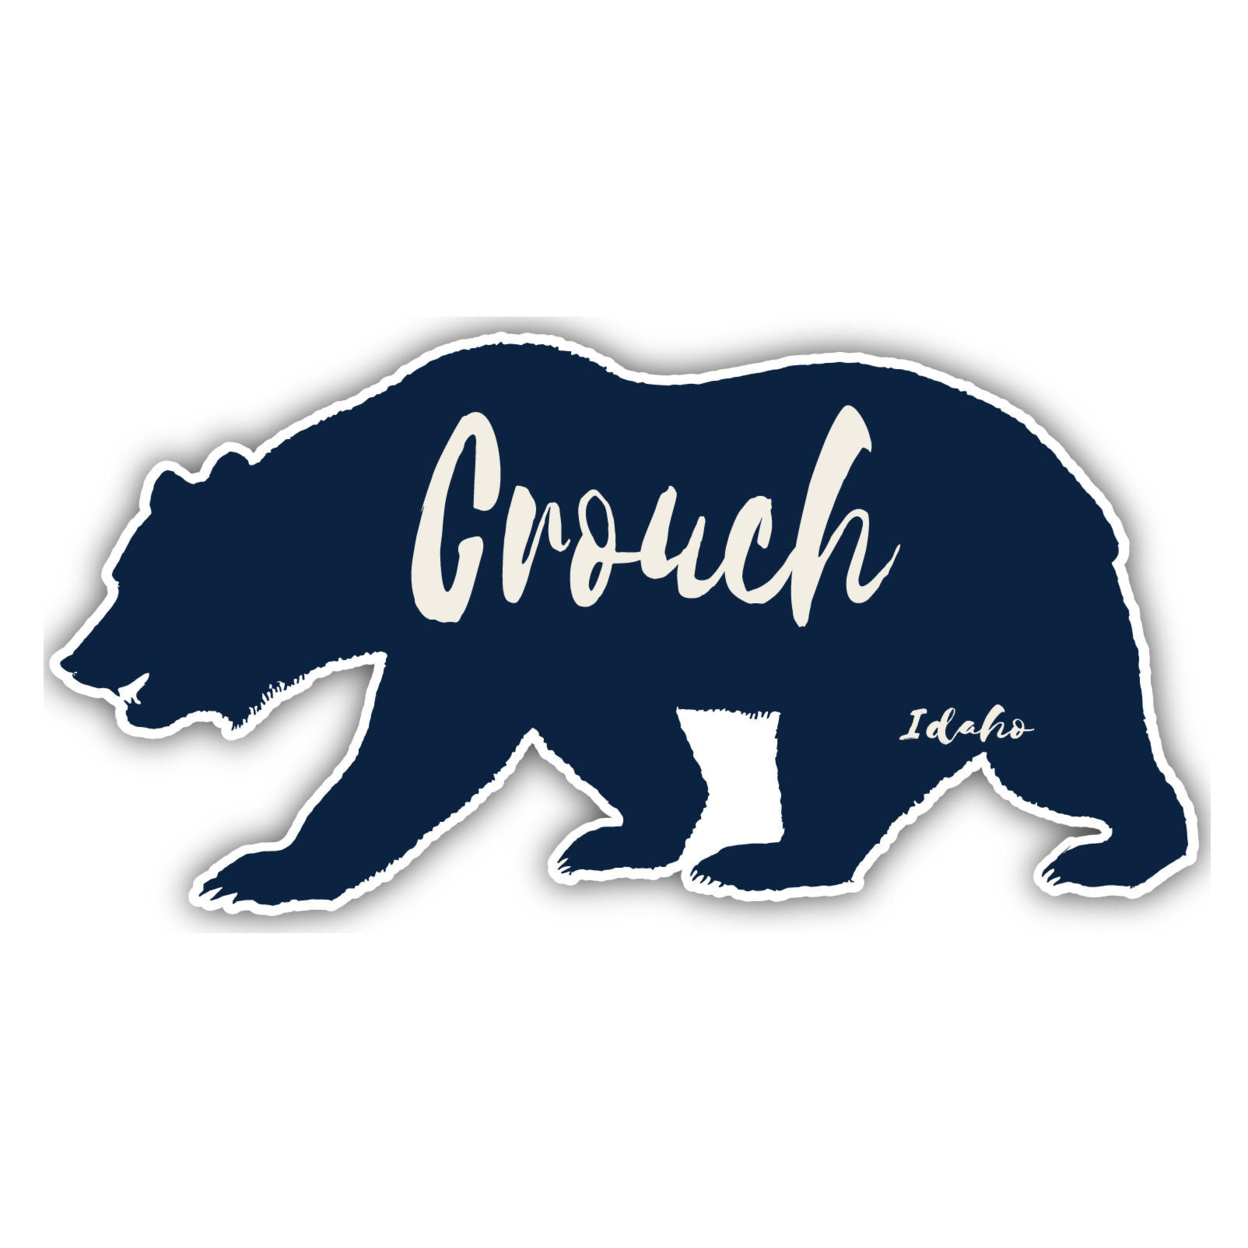 Crouch Idaho Souvenir Decorative Stickers (Choose Theme And Size) - Single Unit, 12-Inch, Bear